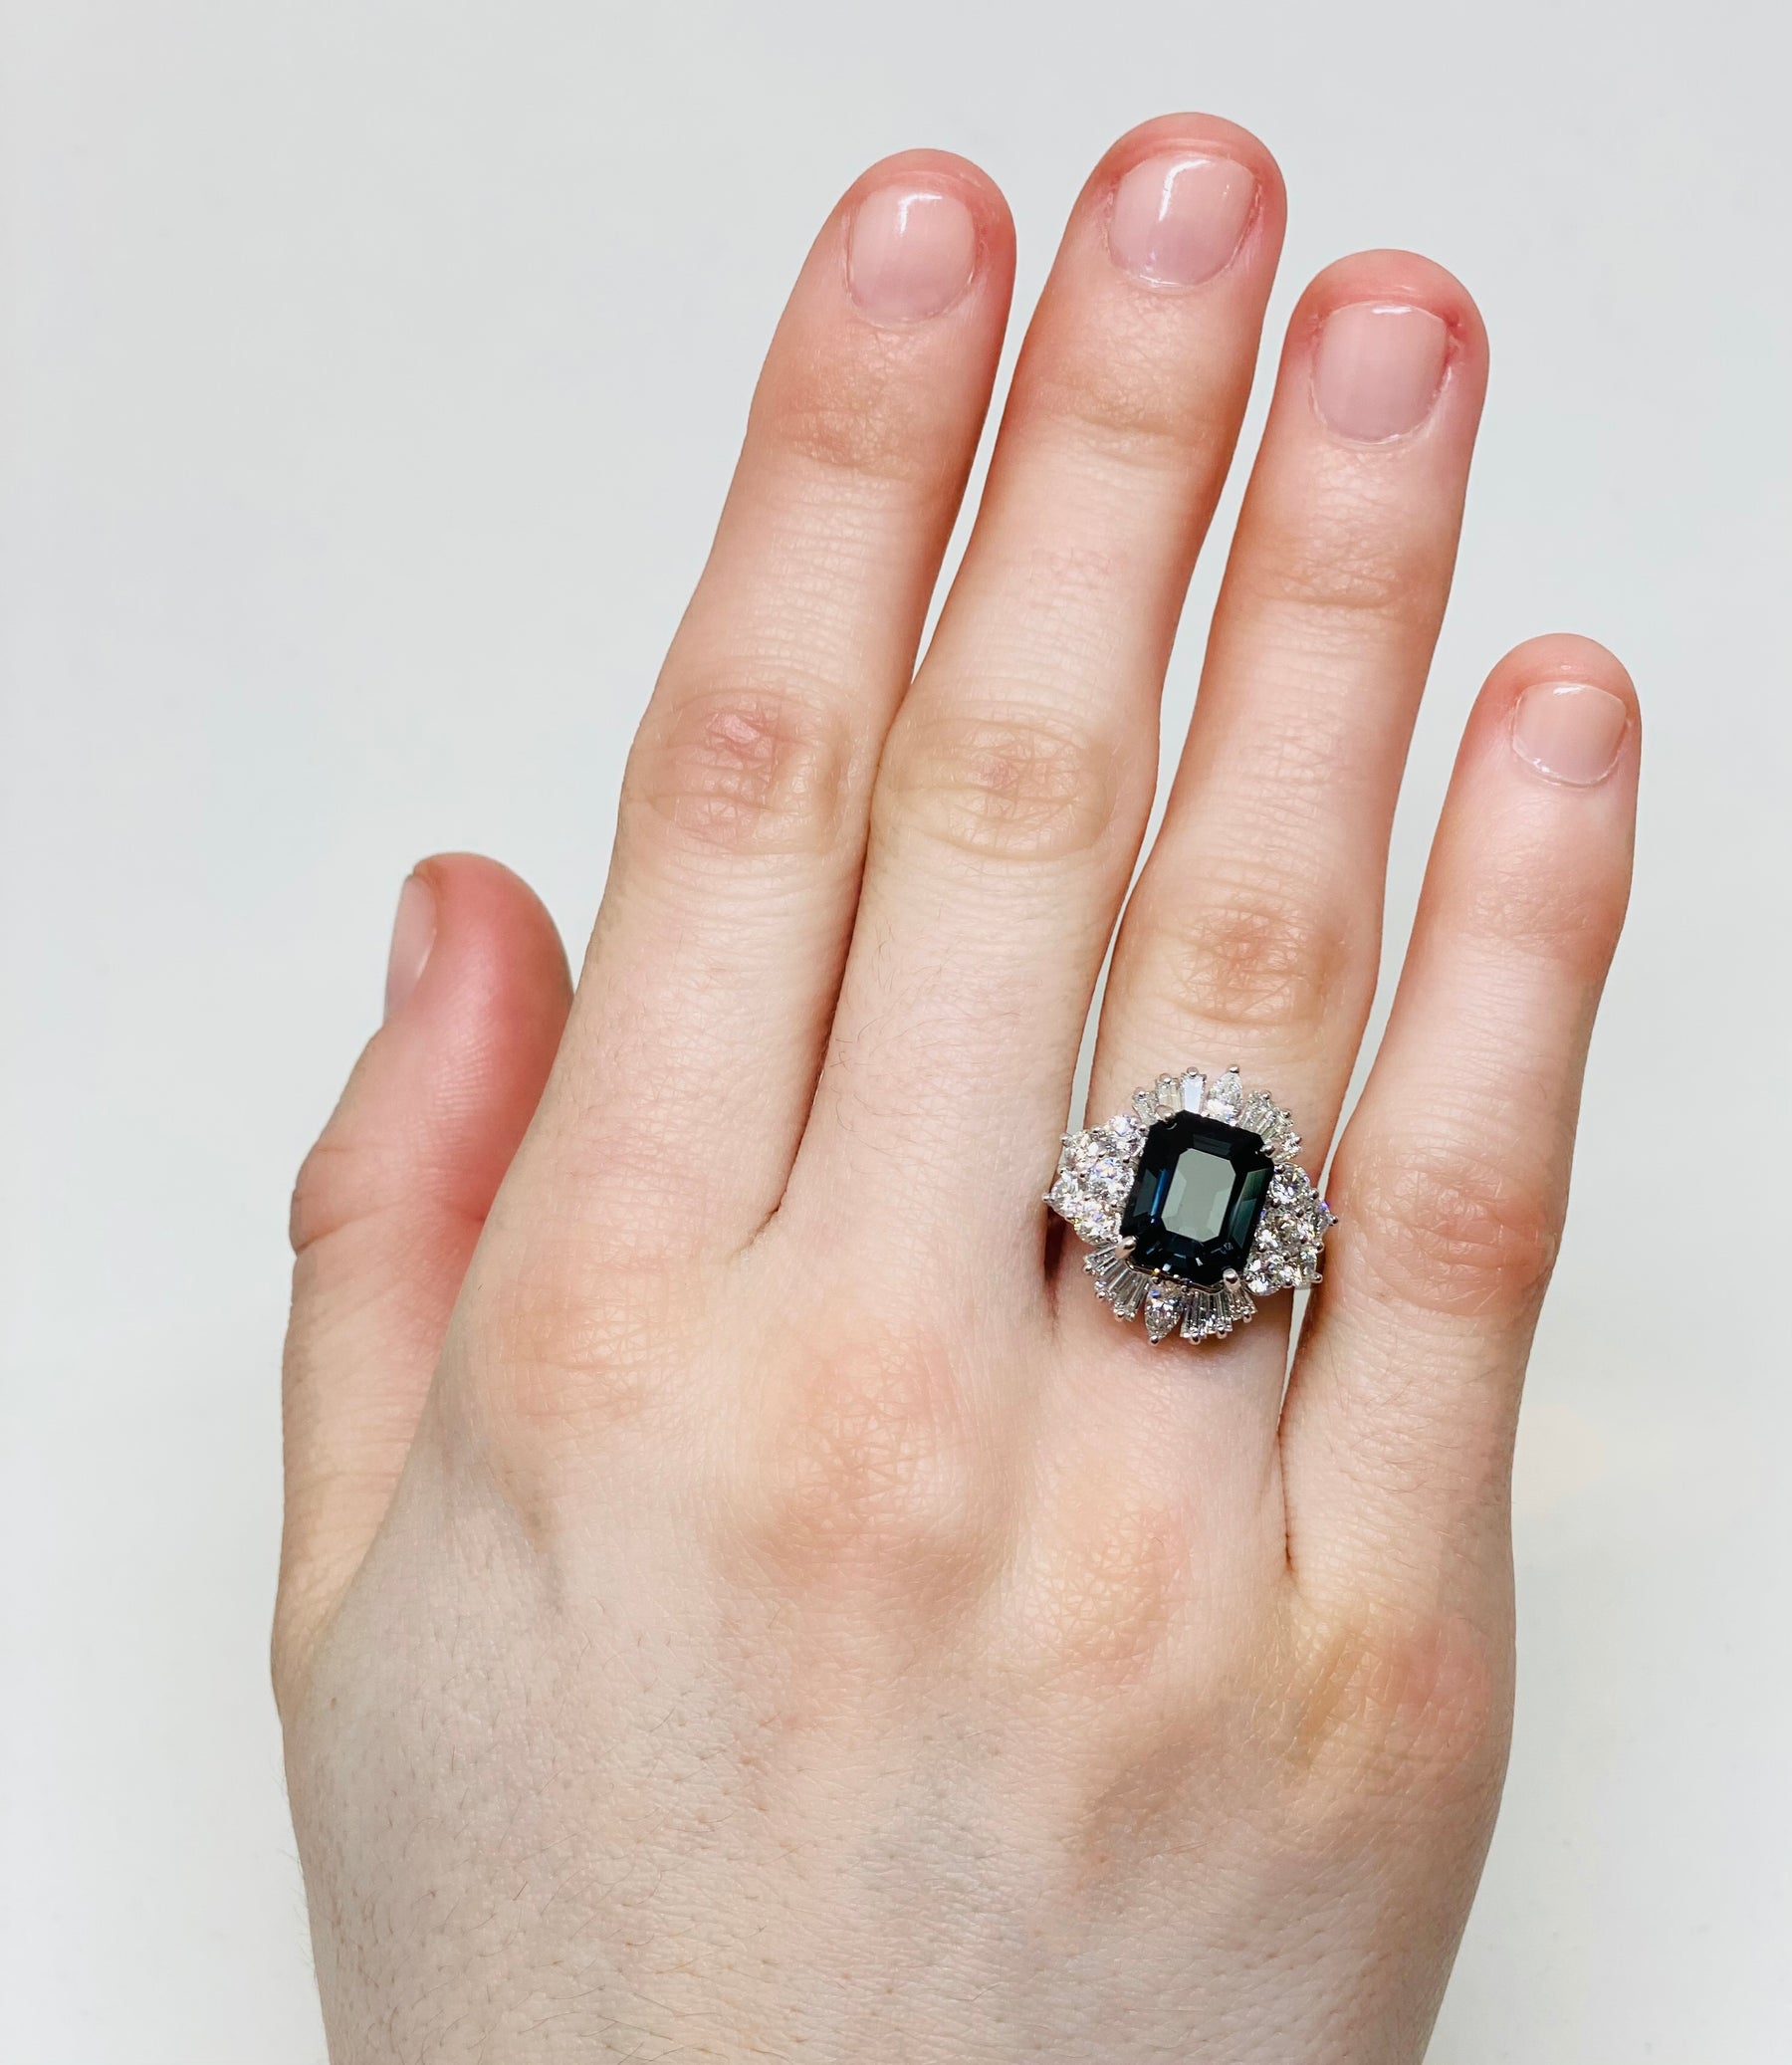  Art Deco inspired ring.  - Black Spinel and Diamonds on Model